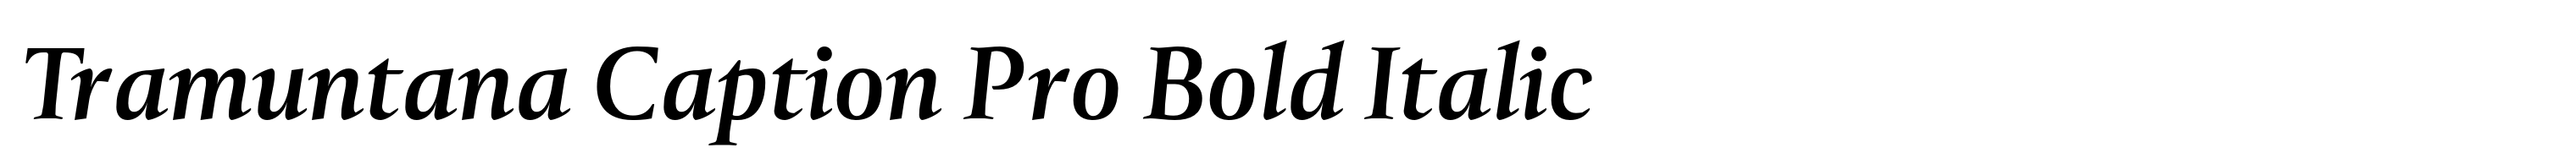 Tramuntana Caption Pro Bold Italic